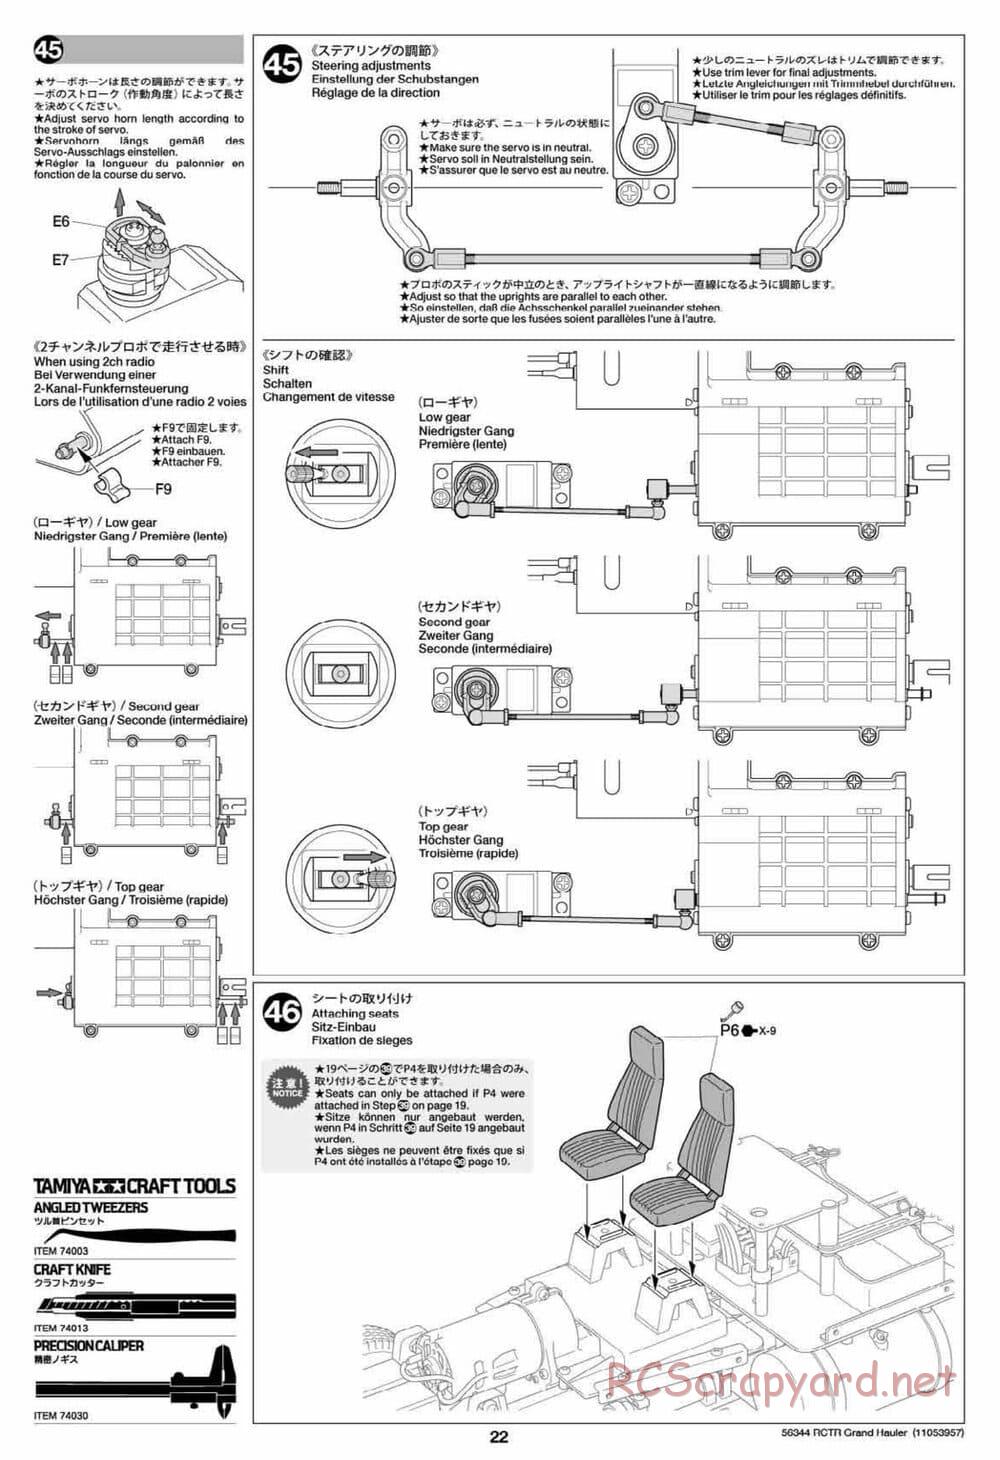 Tamiya - Grand Hauler Tractor Truck Chassis - Manual - Page 22